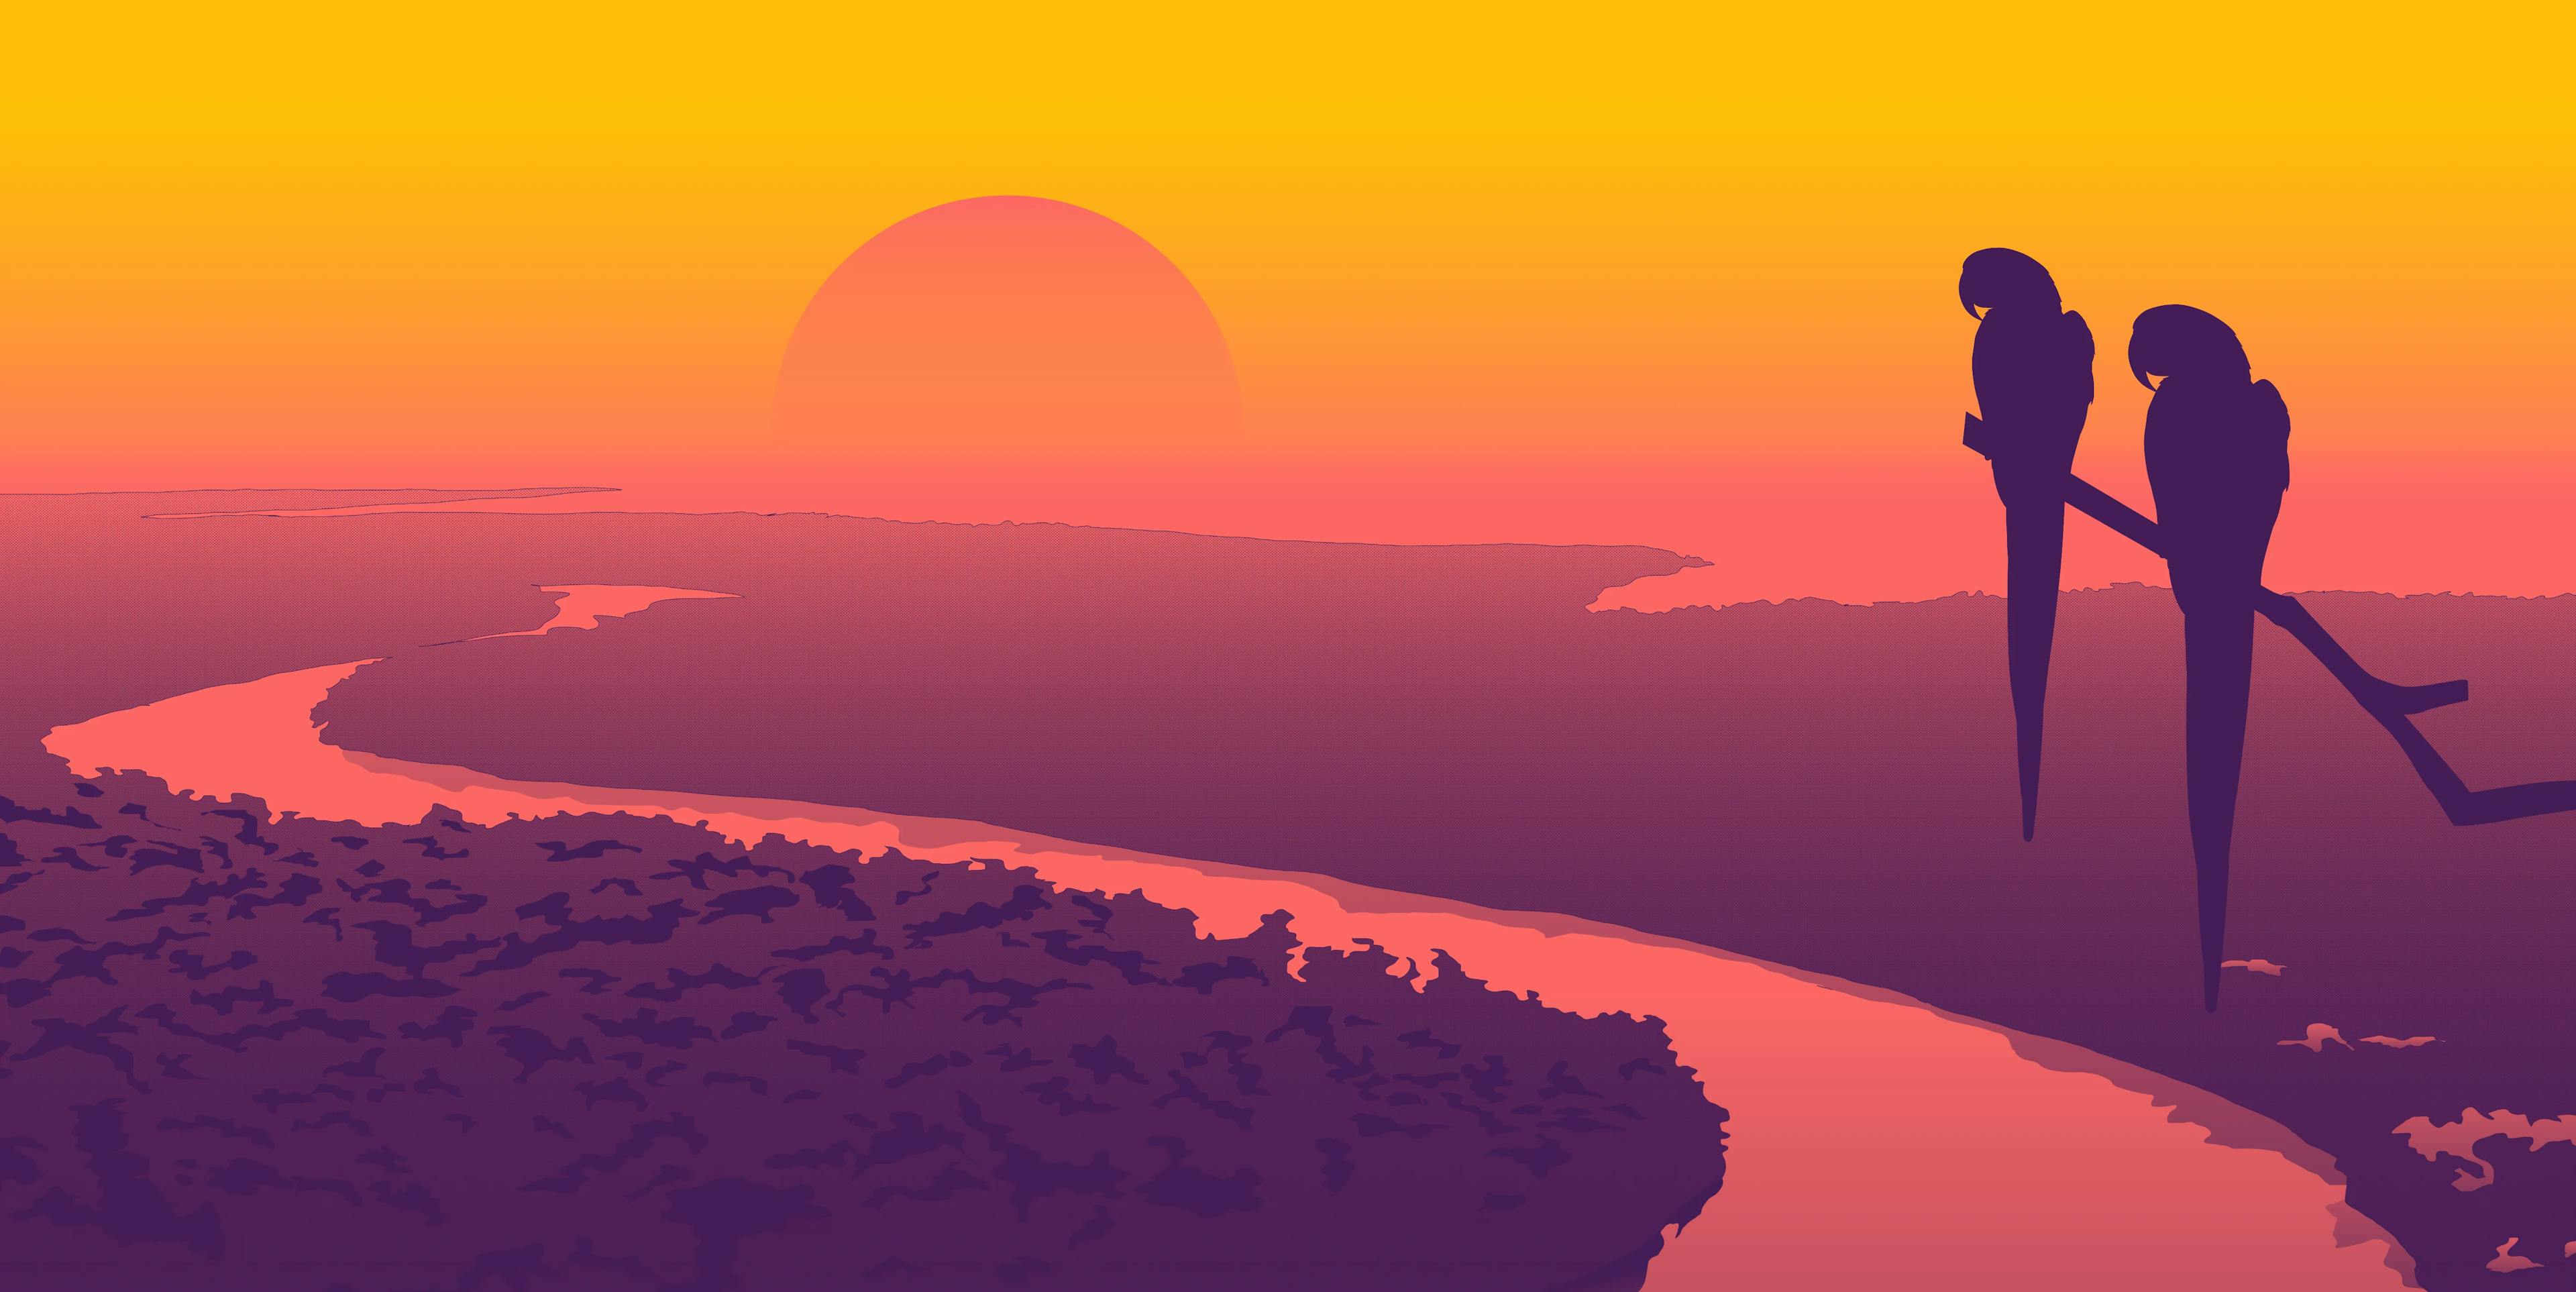 A sunset over Amazon rainforest